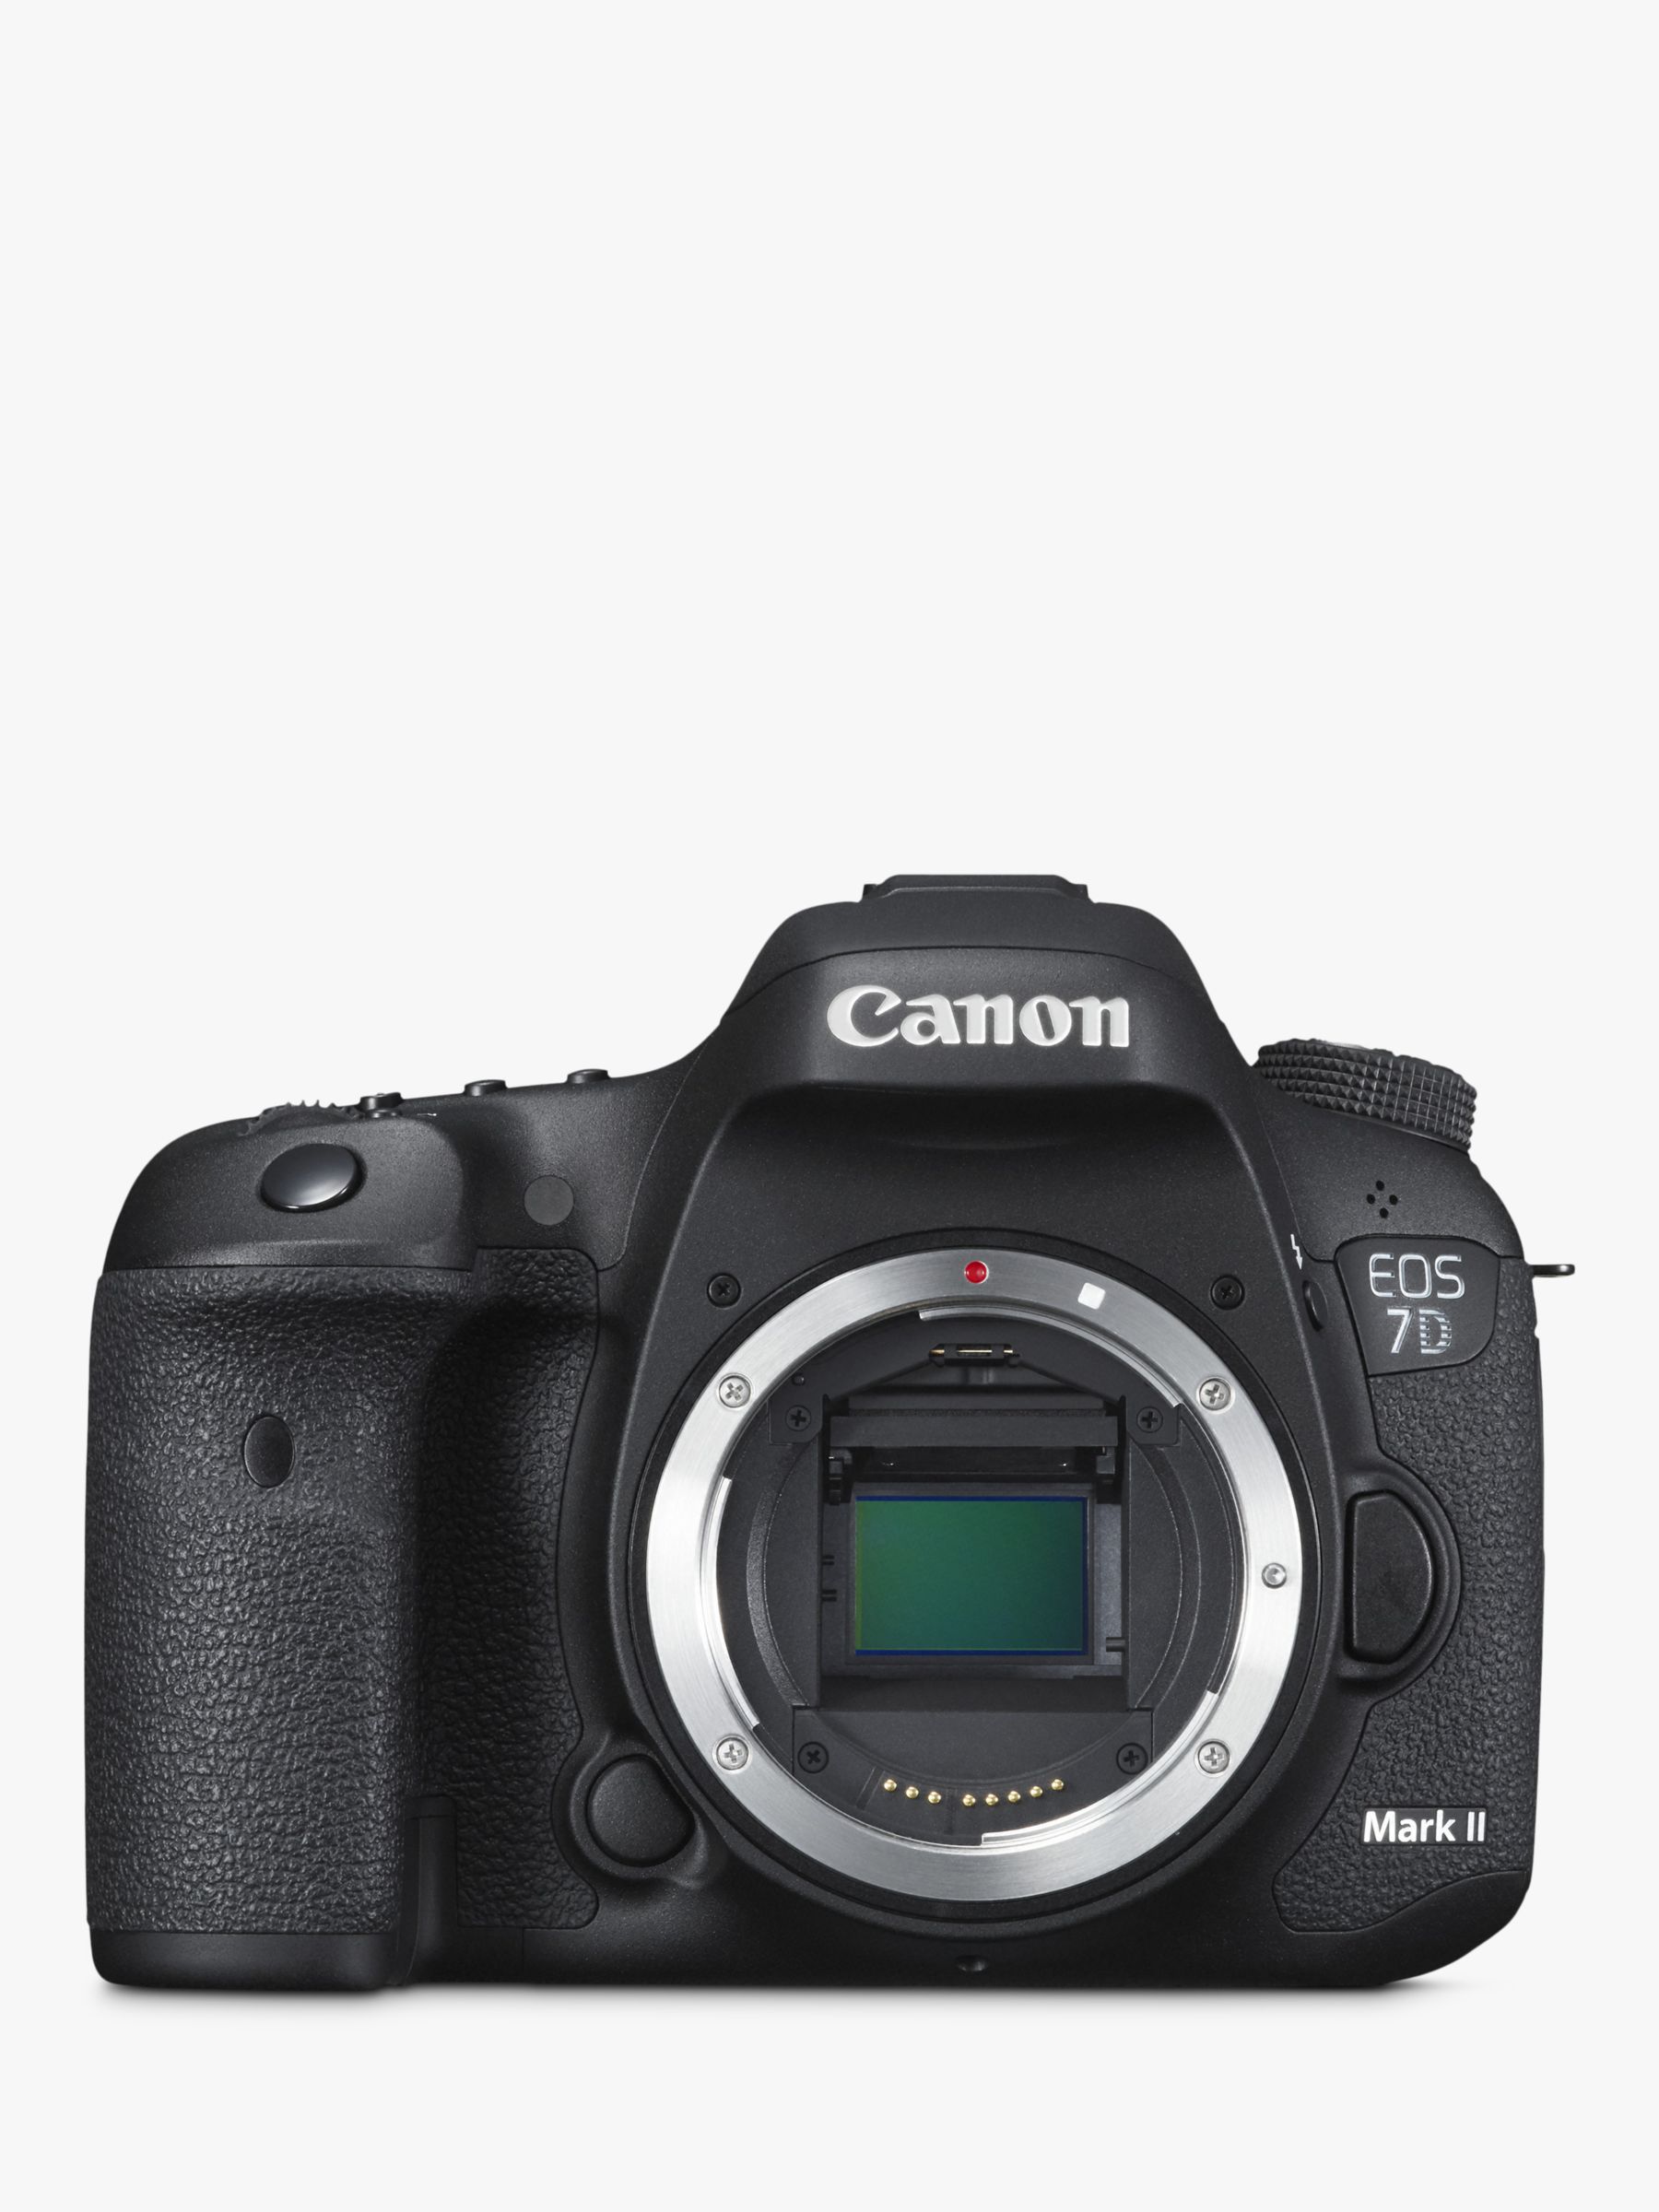 Canon EOS 7D MK II Digital SLR Camera, HD 1080p, 20.2MP, 3 LCD Screen, Body Only